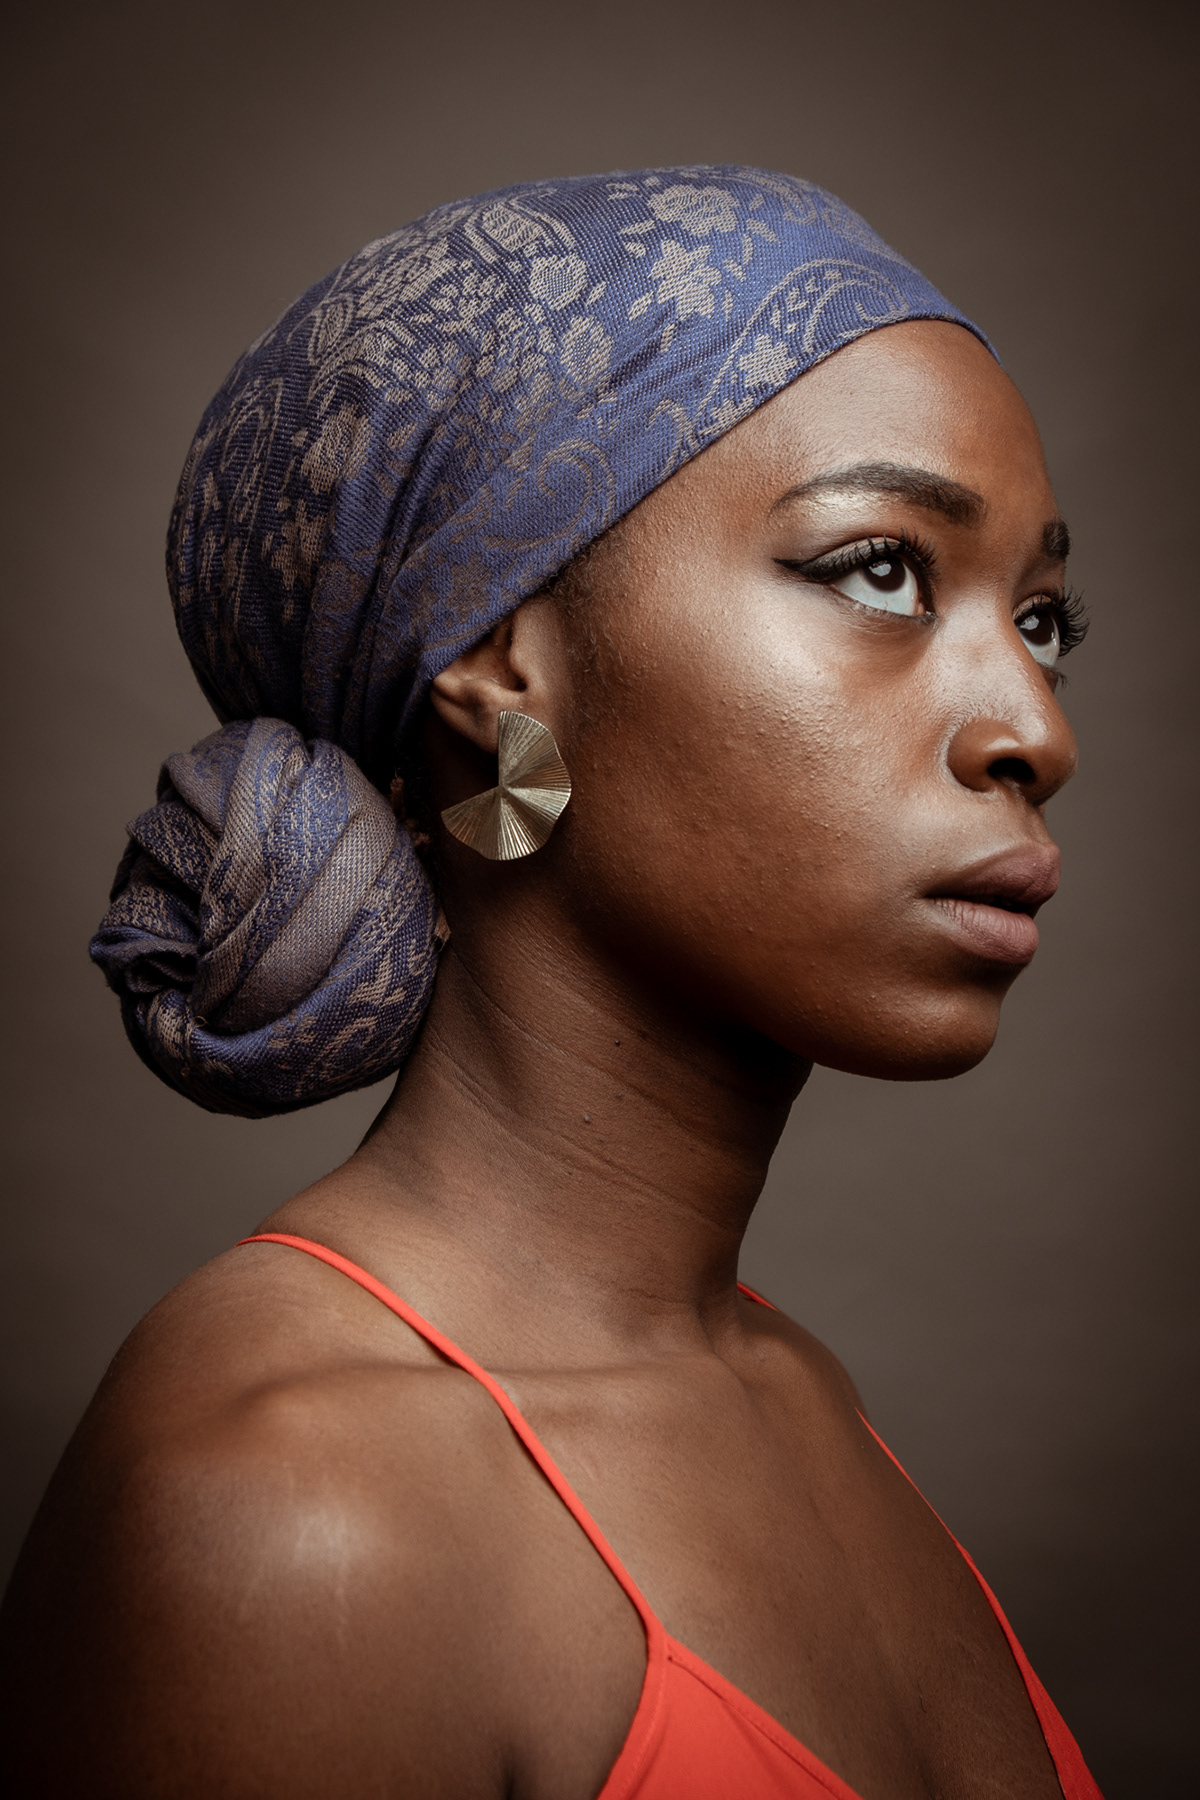 africangirl BlackGirl blackwoman  Photography  portrait PortraitPhotography portraits woman